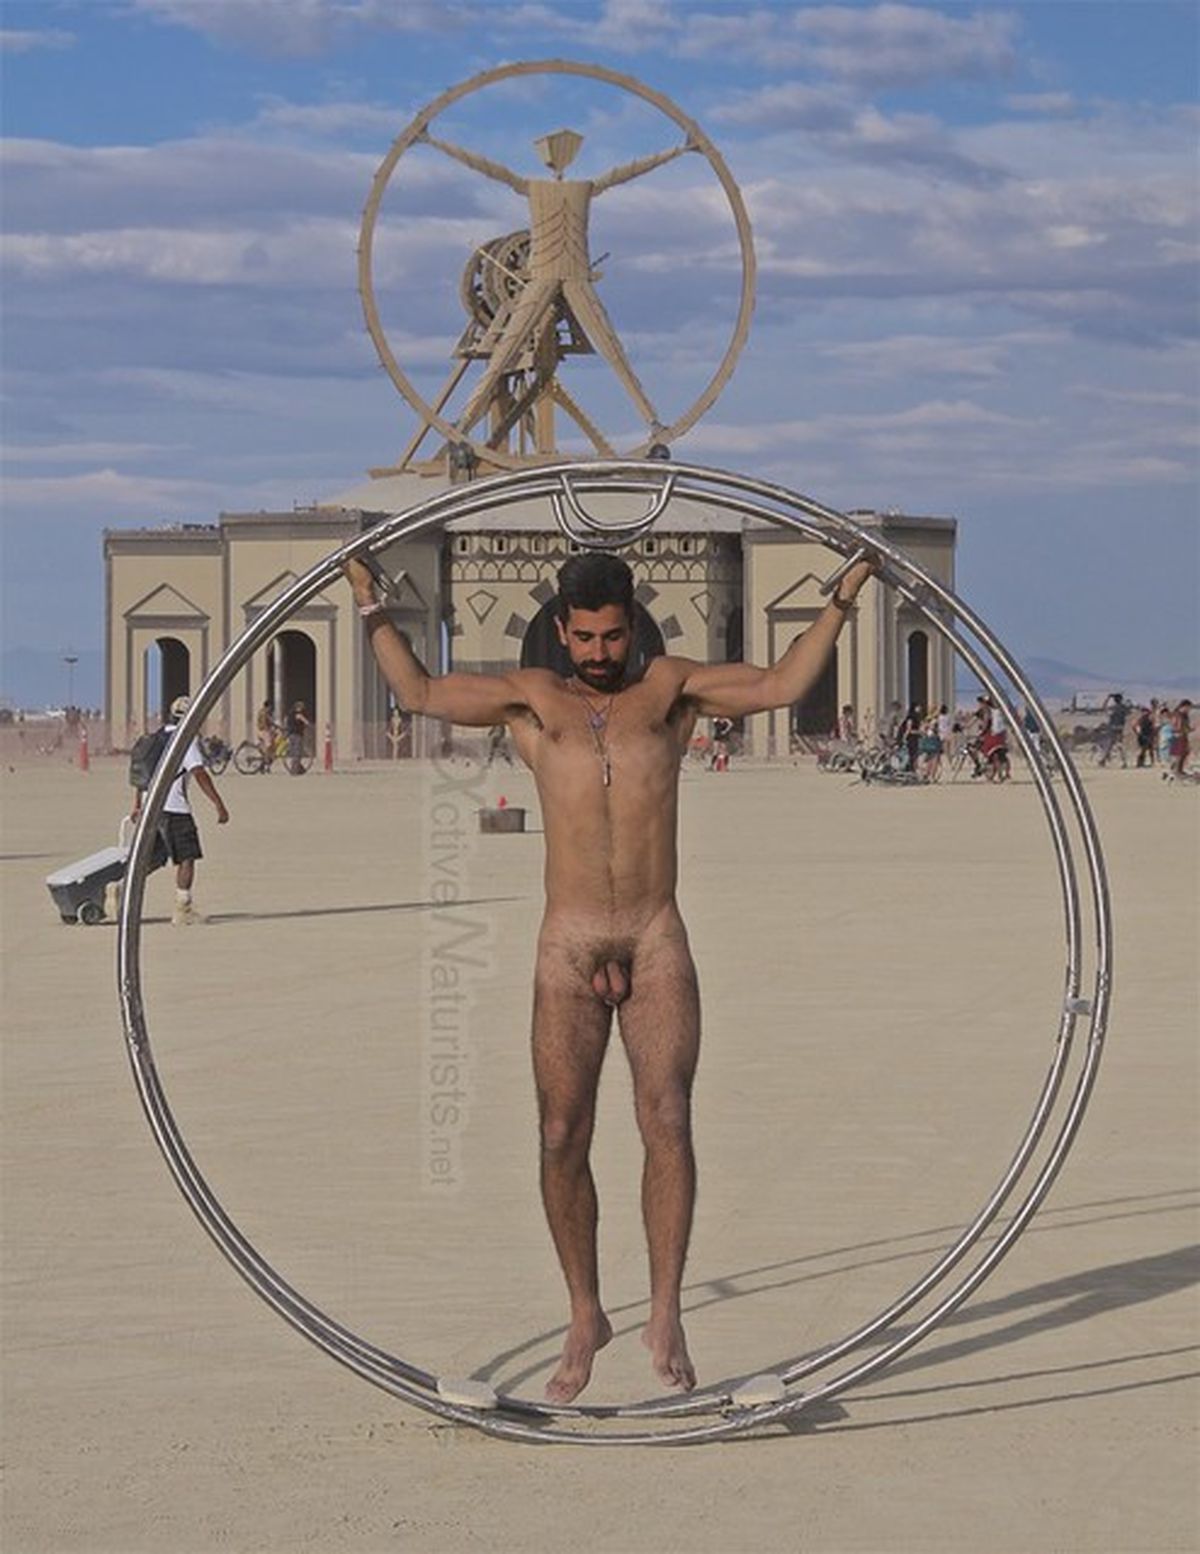 https://www.nudismlife.com/galleries/public_nudity/burning_man/active_naturists/active_naturists_038.jpg